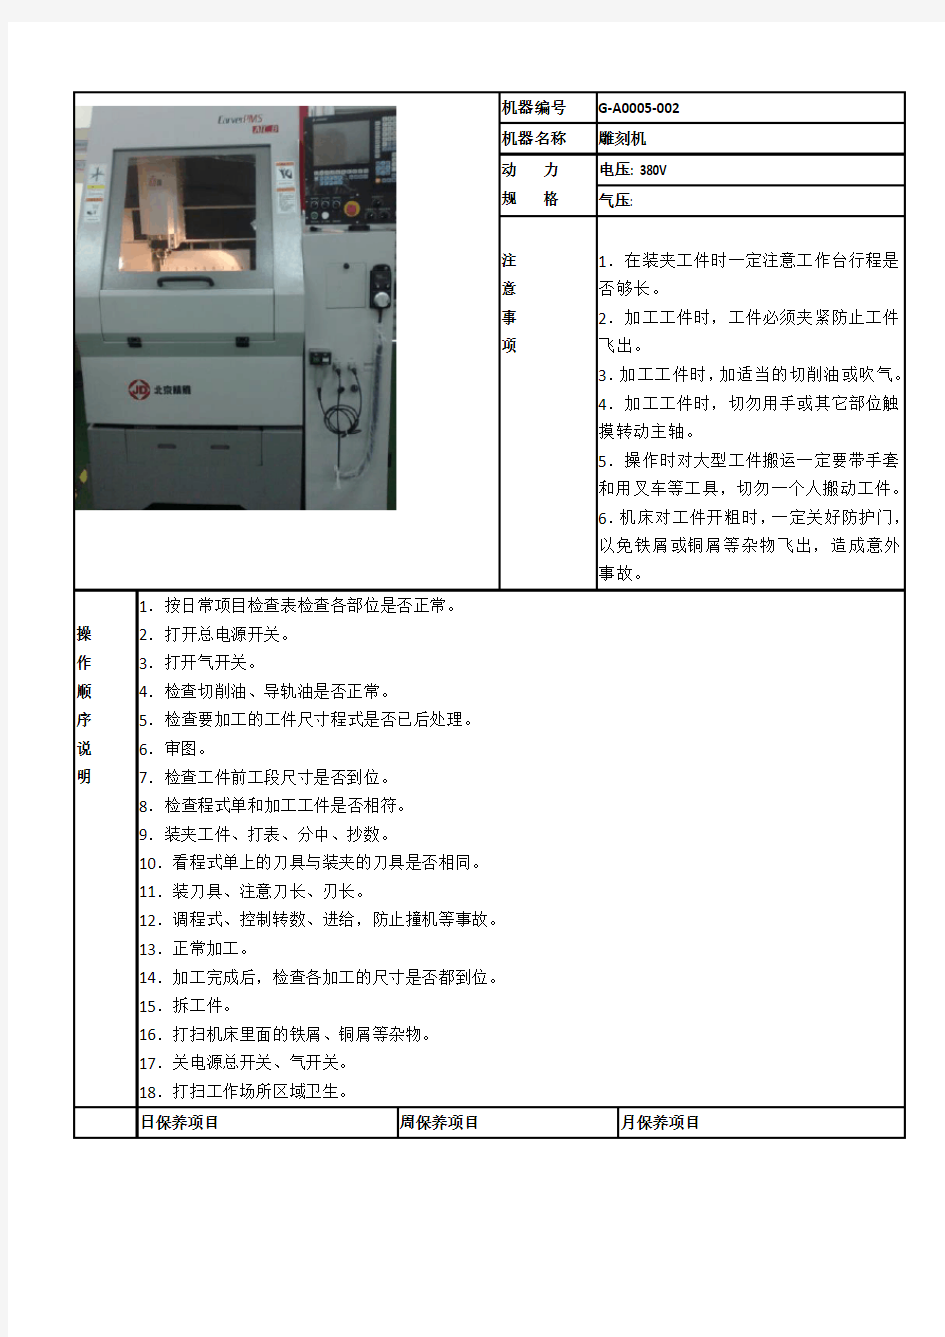 cnc-MD-40-014.A北京精雕雕刻机设备操作说明书